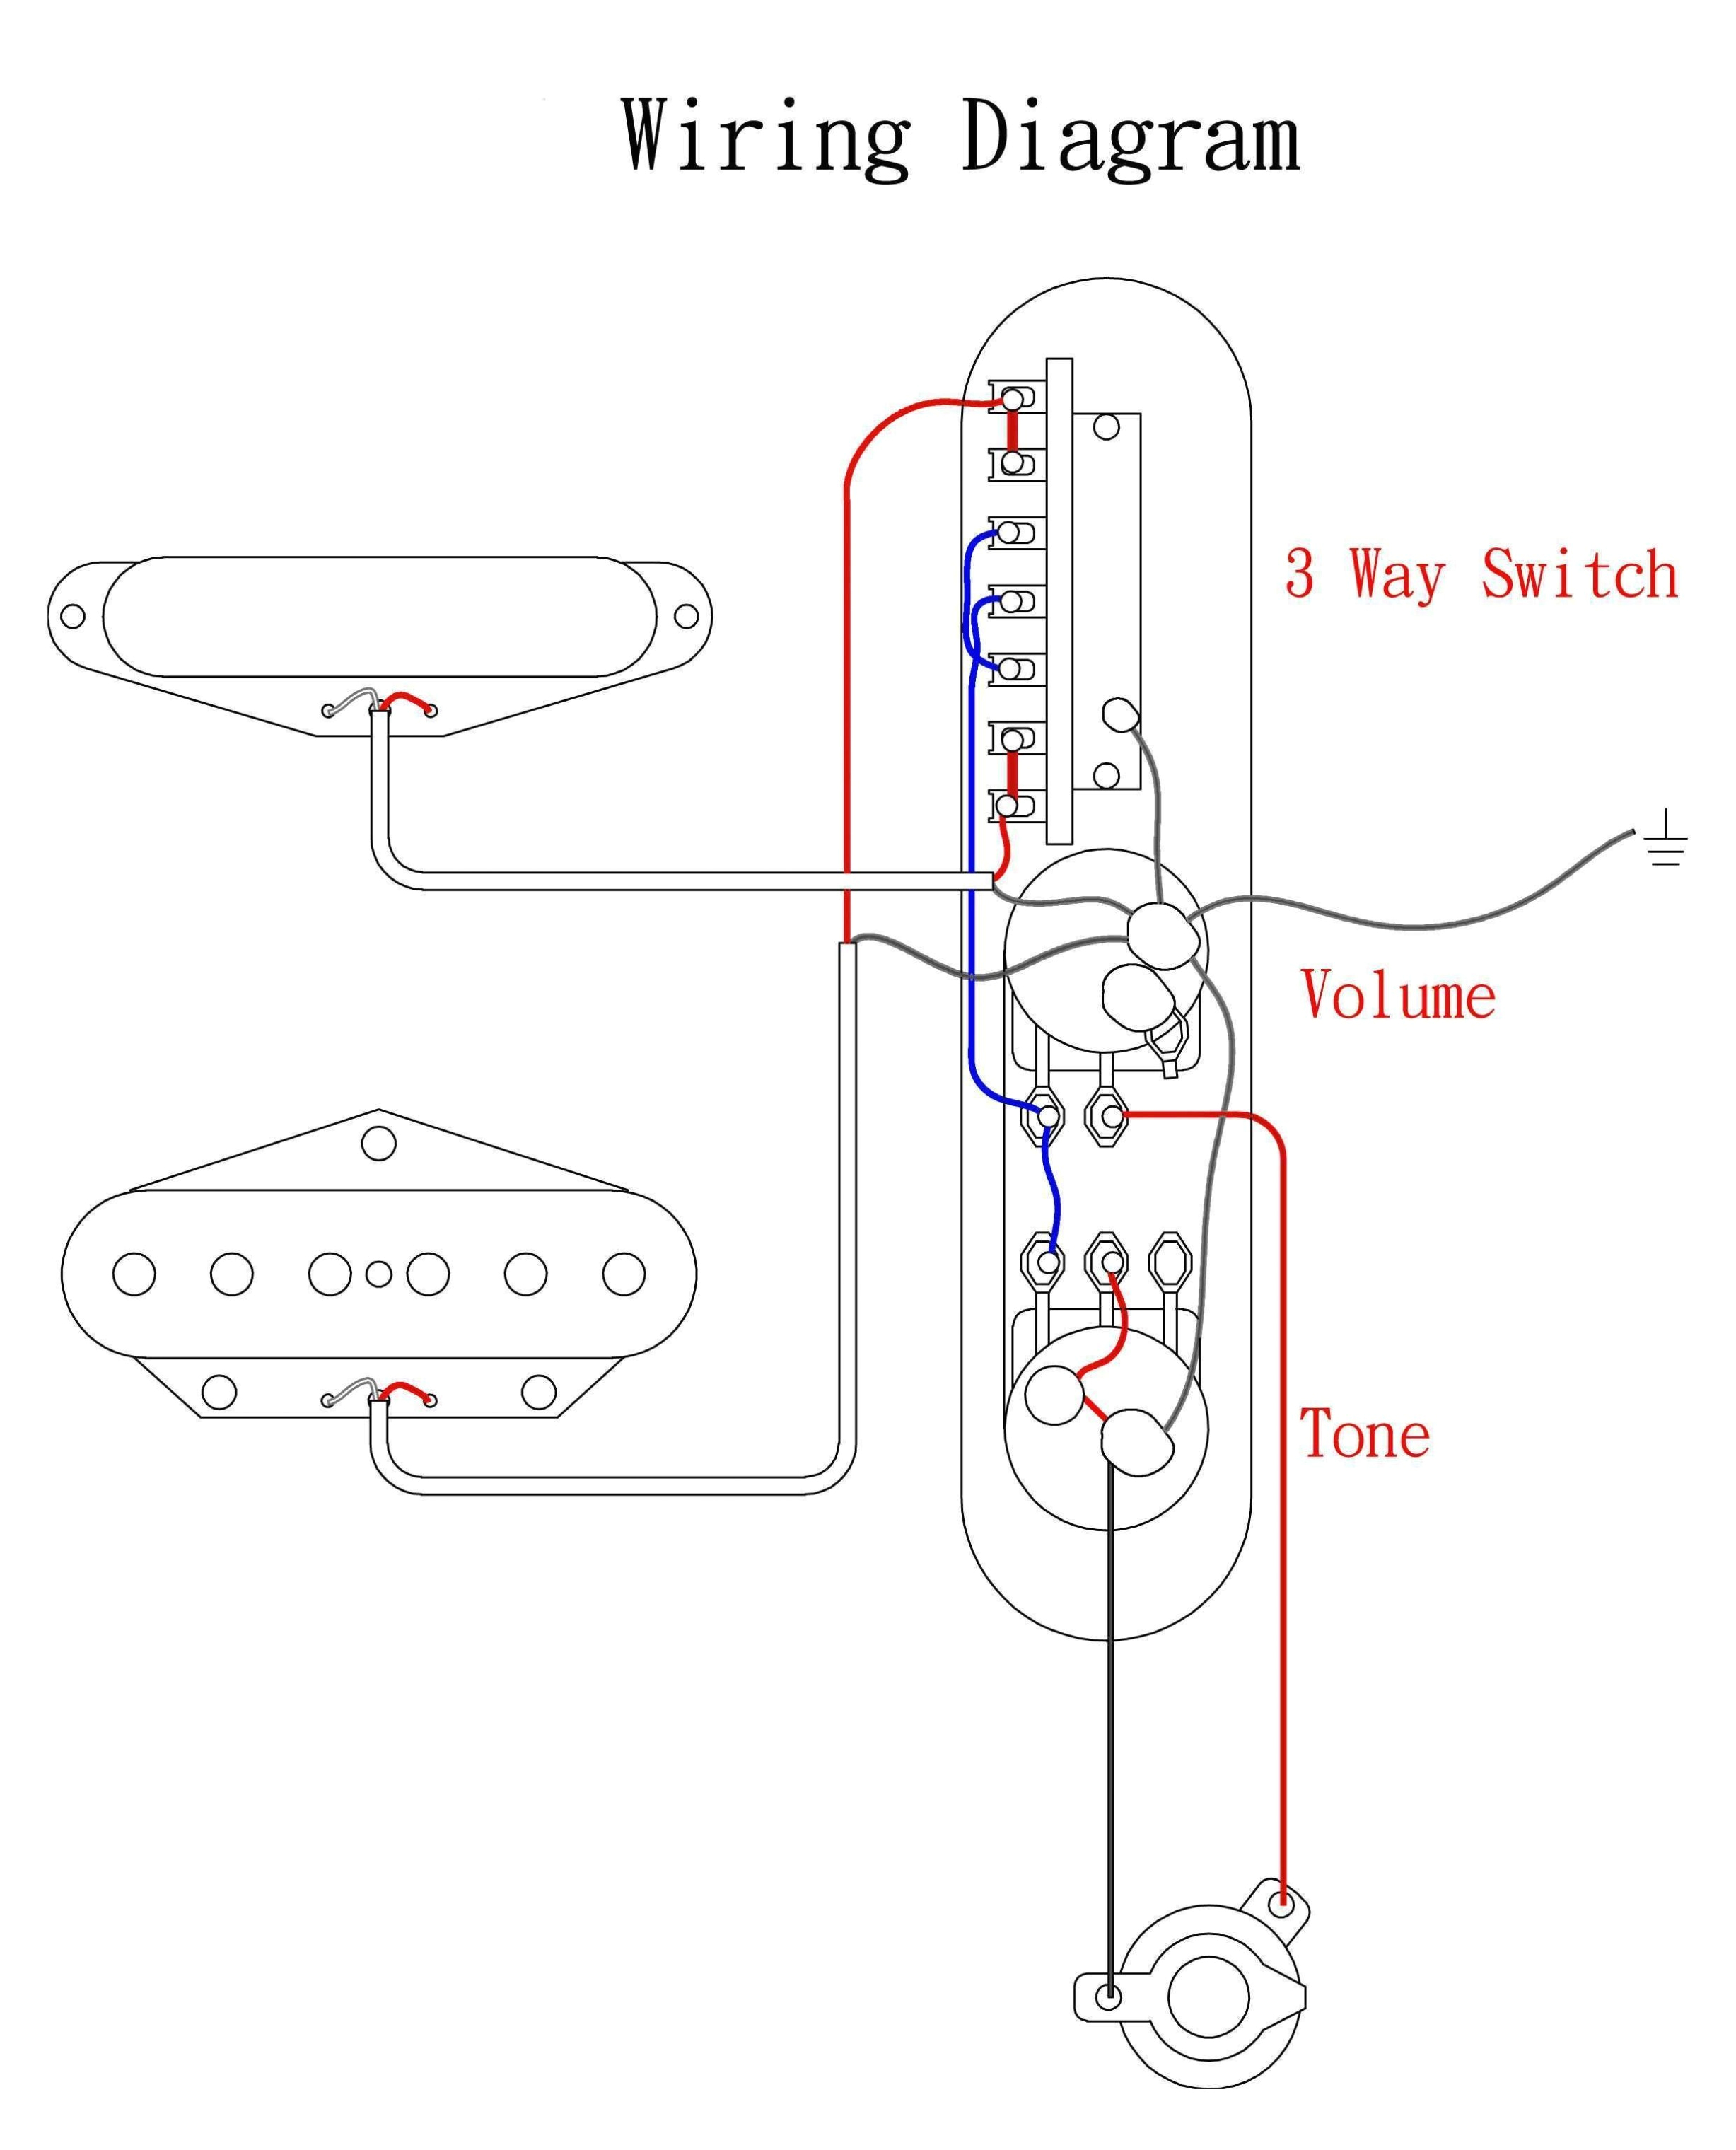 3 way switch wiring telecaster diagram stewmac wiring diagrams show 3 way switch wiring telecaster diagram